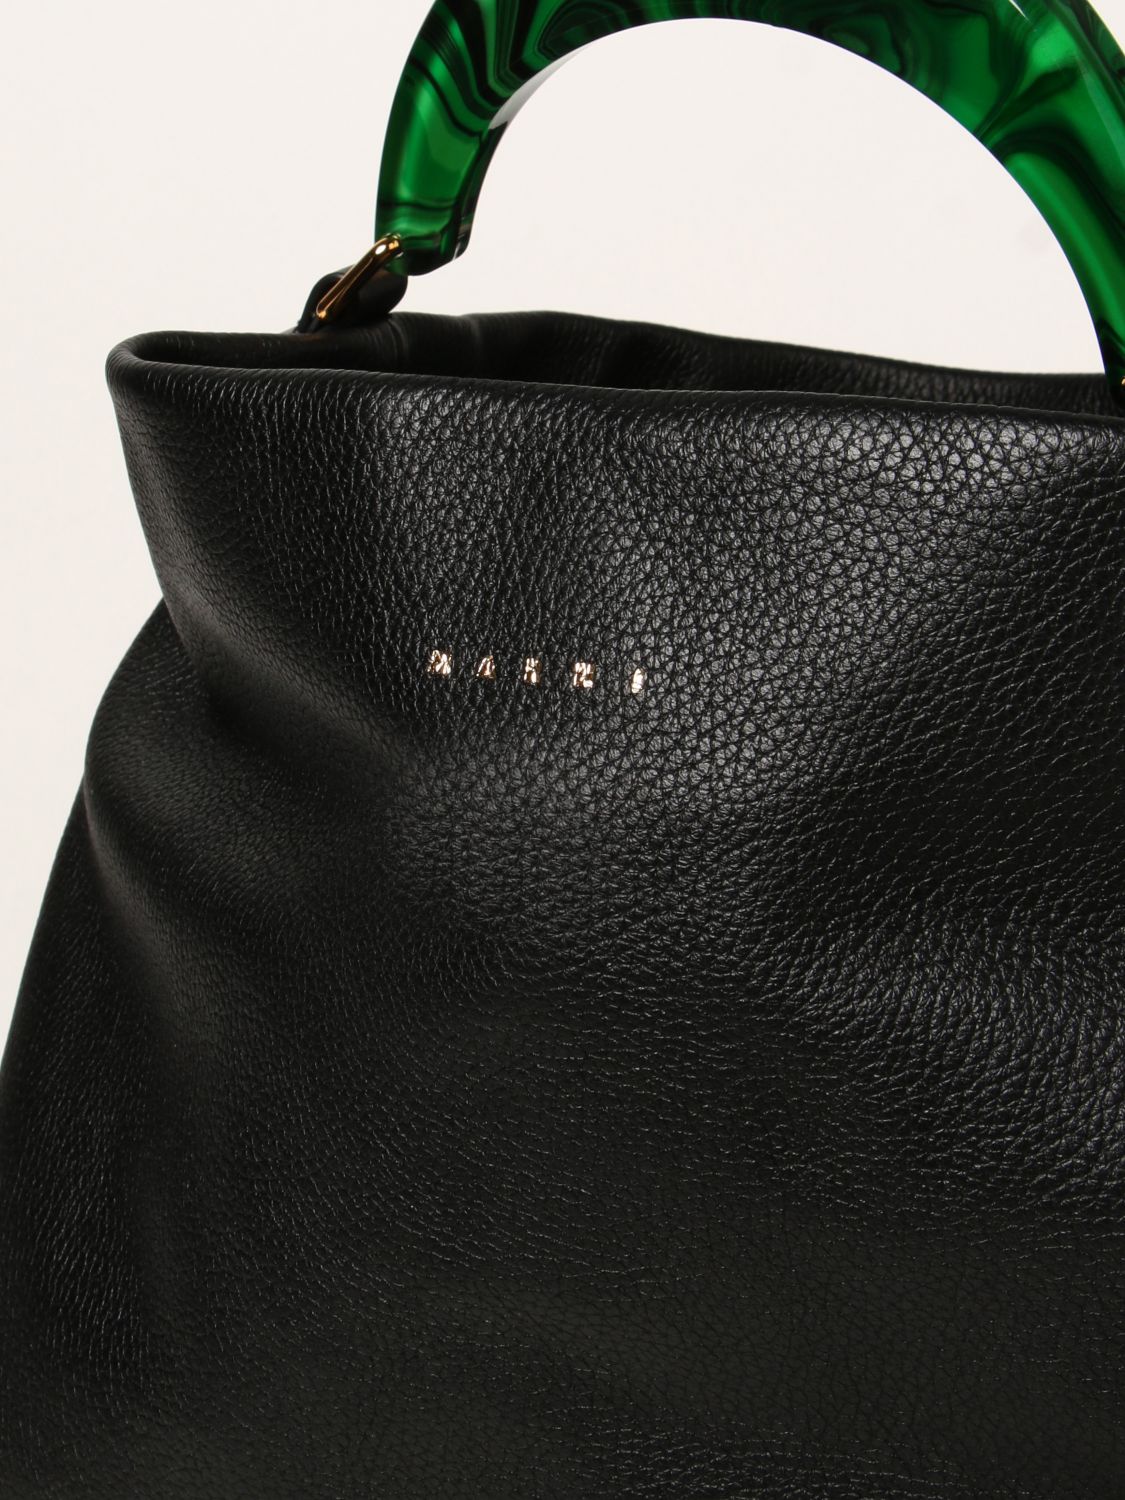 MARNI: hobo bag in textured leather - Black | Marni tote bags 